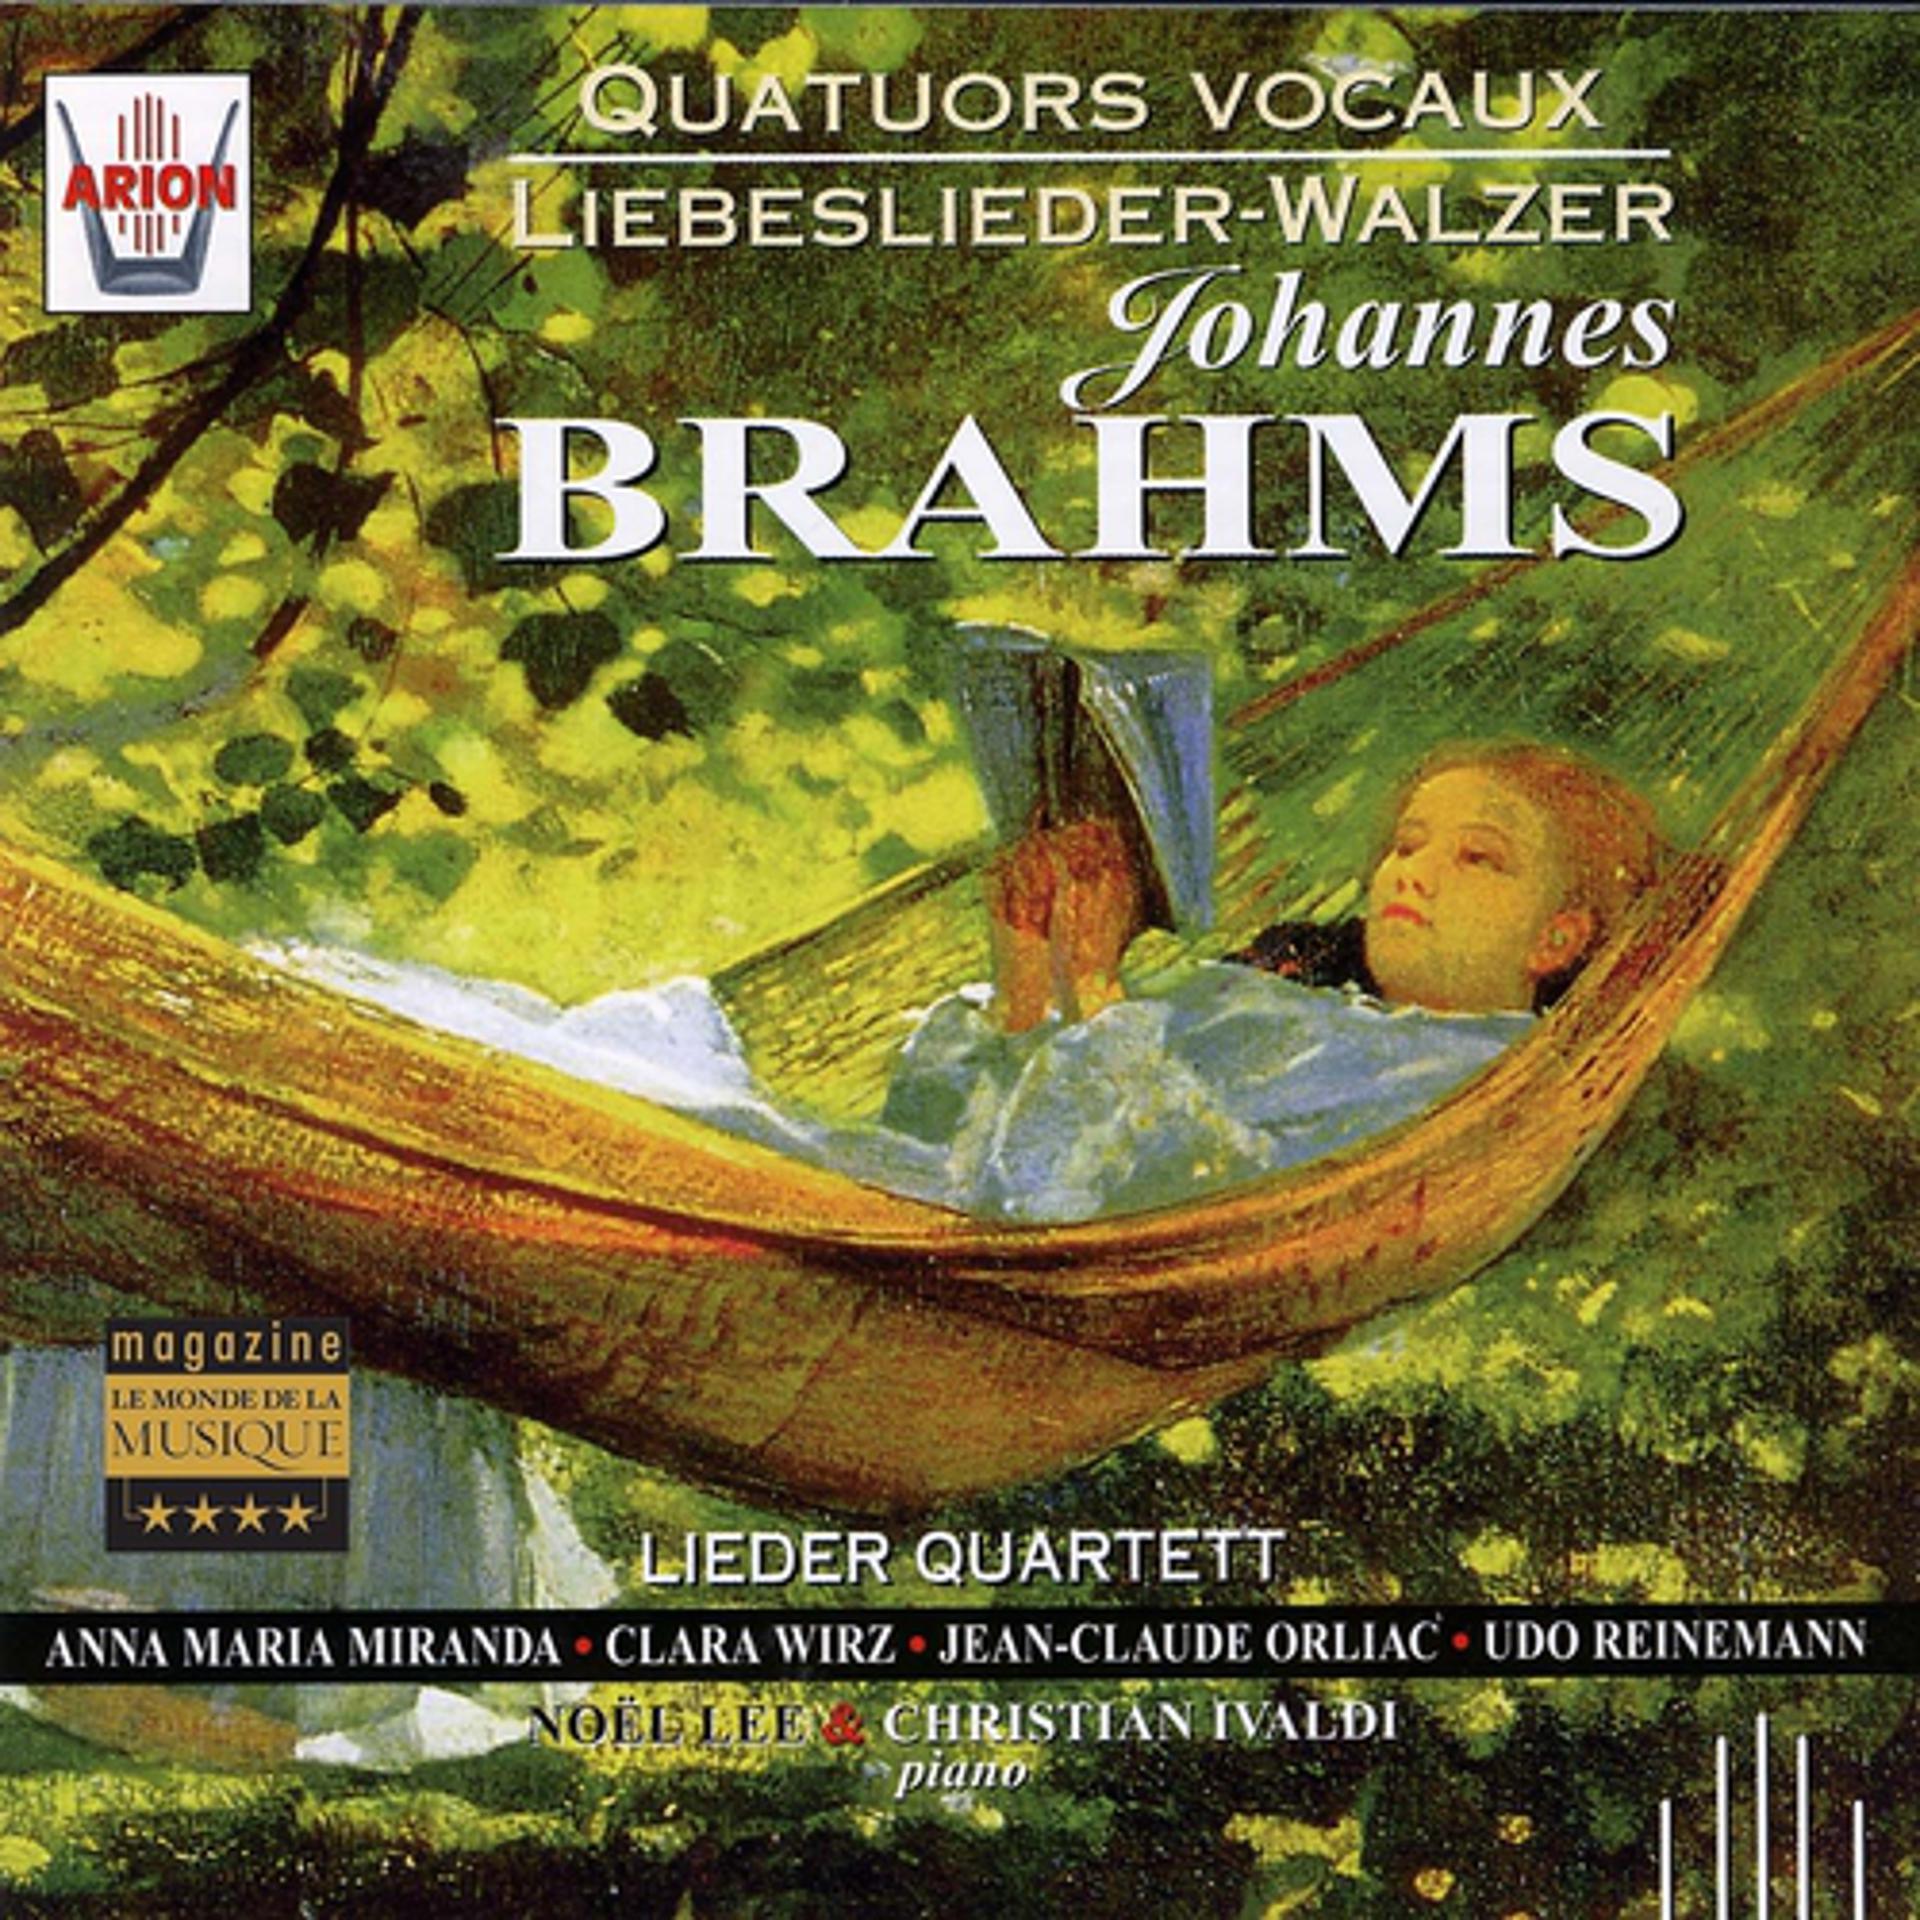 Постер альбома Brahms : Quatuors vocaux, Liebeslieder Walzer